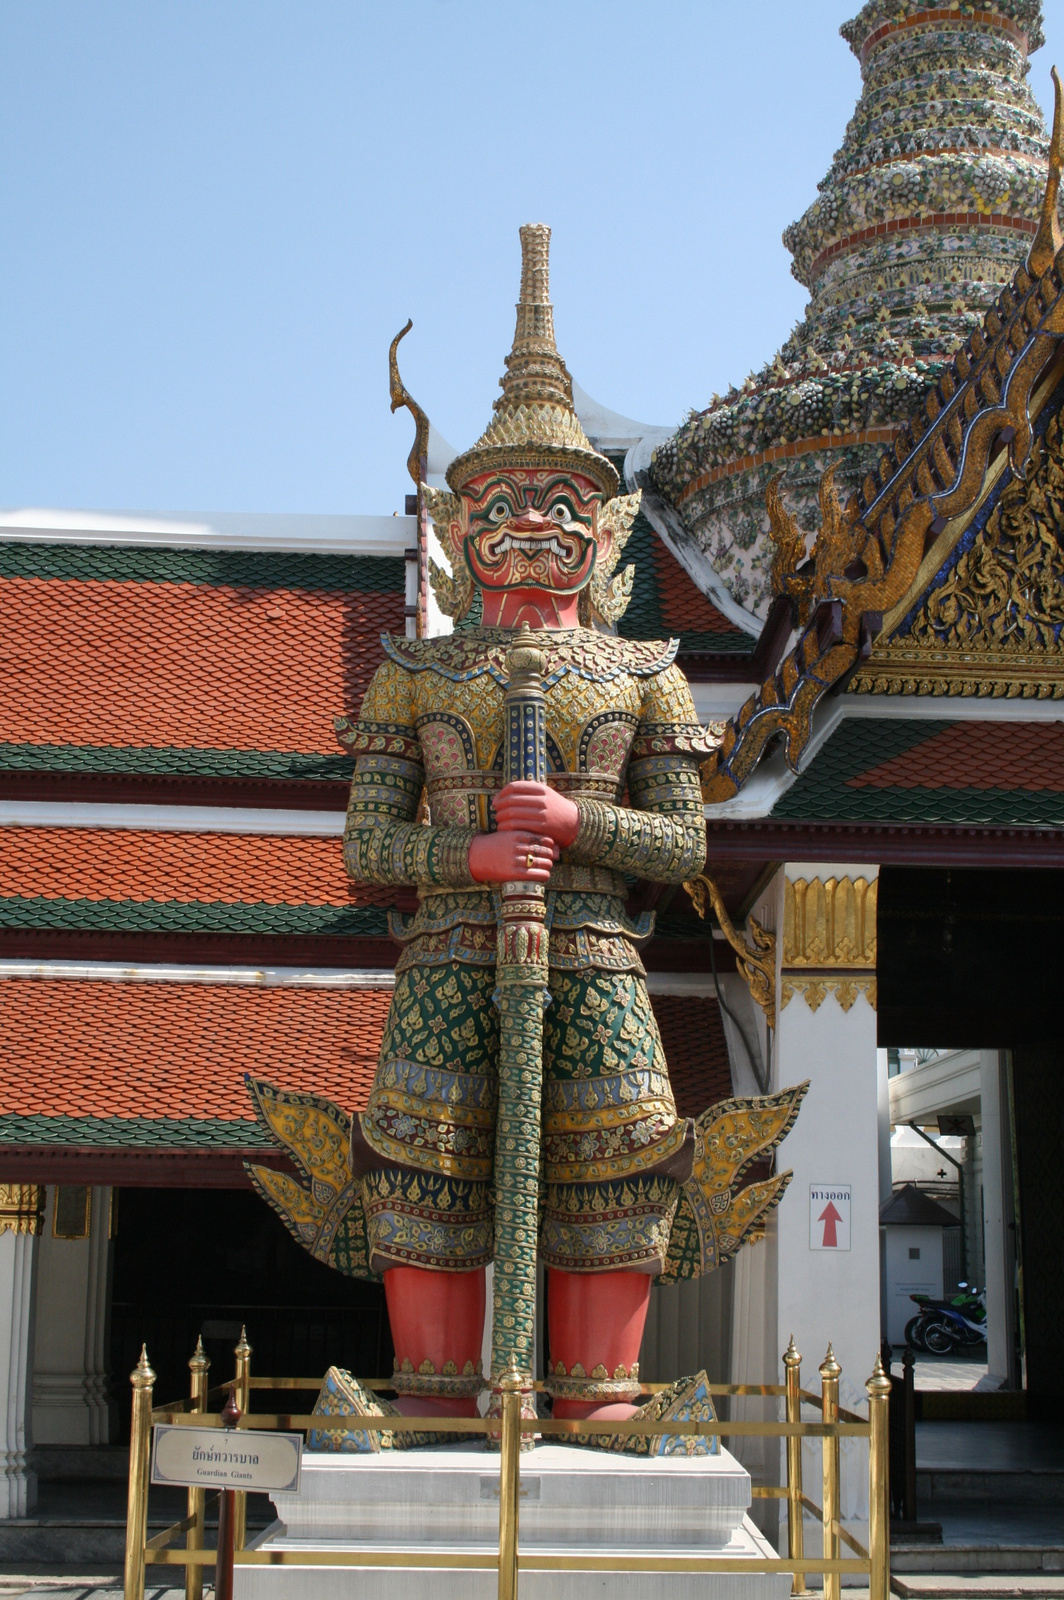 Palotaőr (Bangkok)